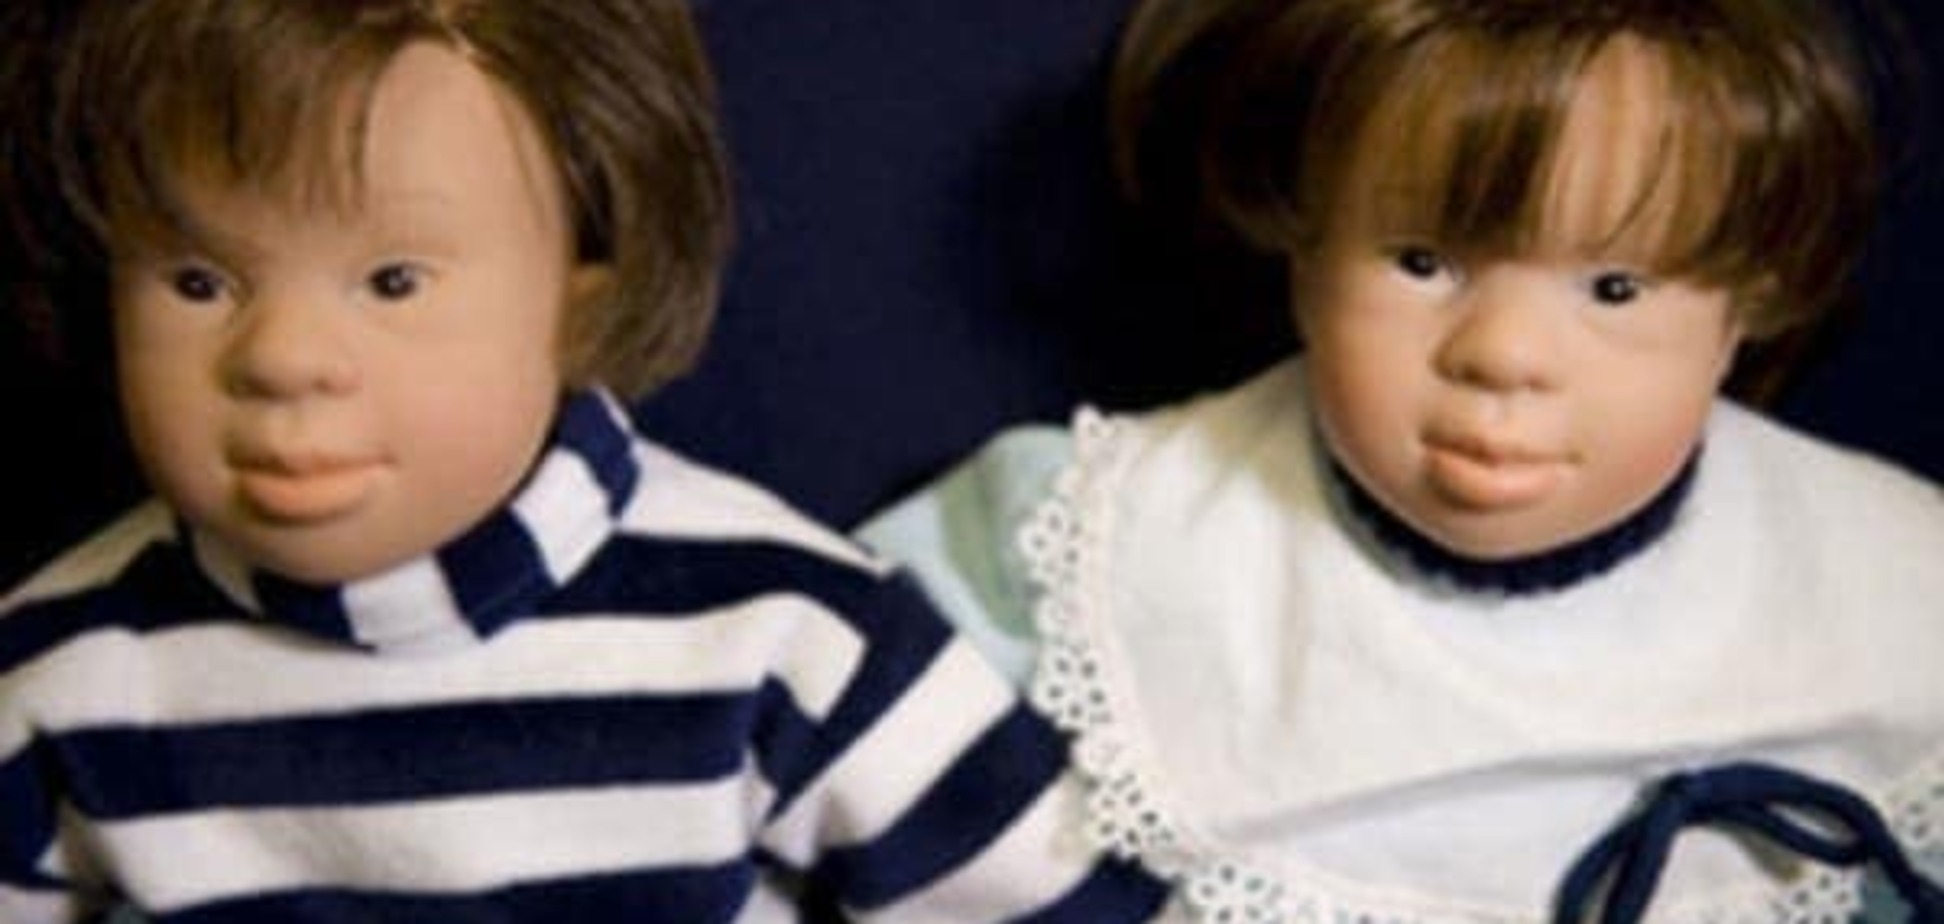 Кукла с признаками синдрома Дауна. Не перестарались ли производители?